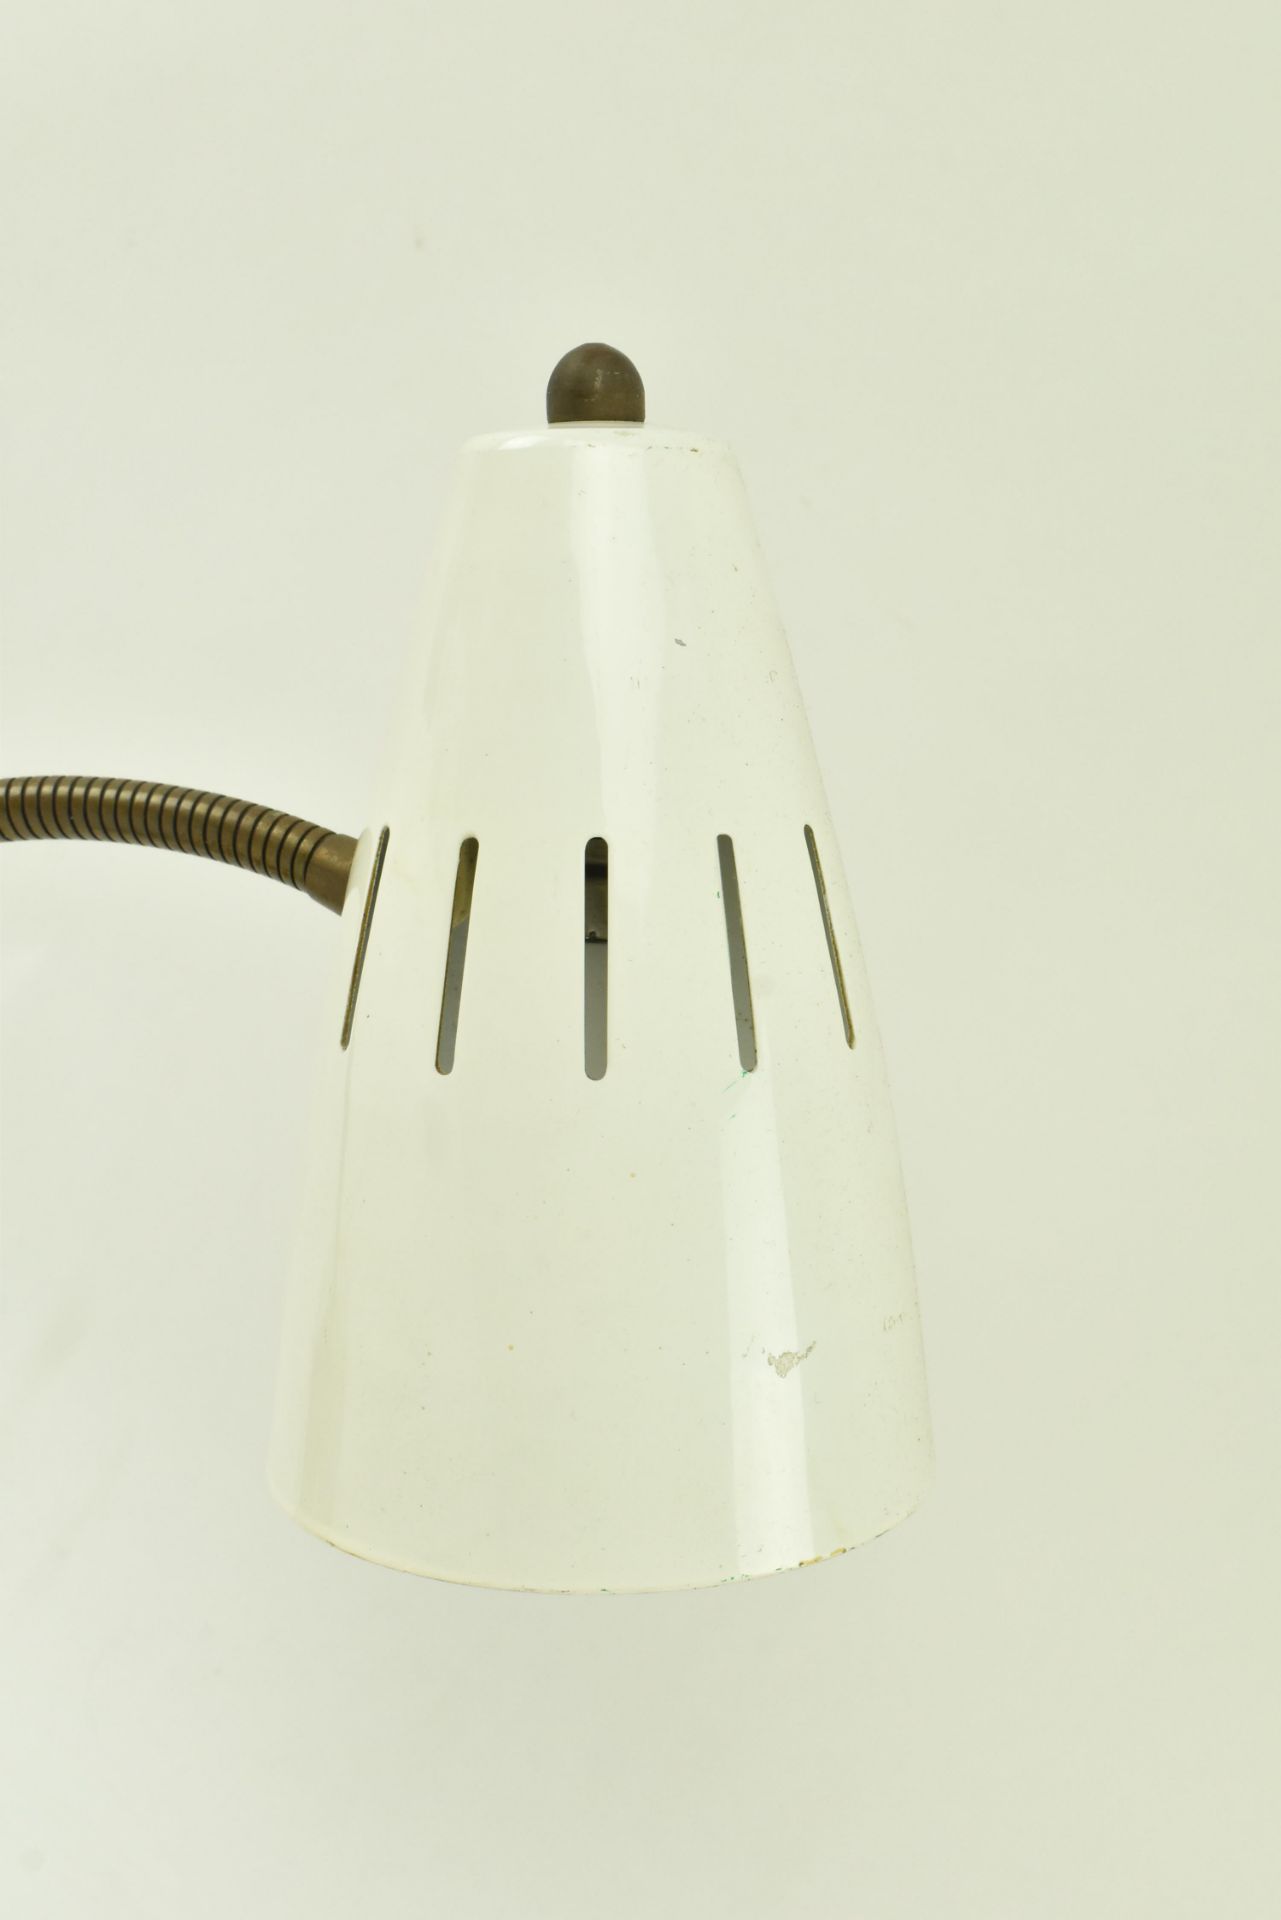 PIFCO MODEL 971 - RETRO 20TH CENTURY GOOSENECK DESK LAMP - Image 4 of 7